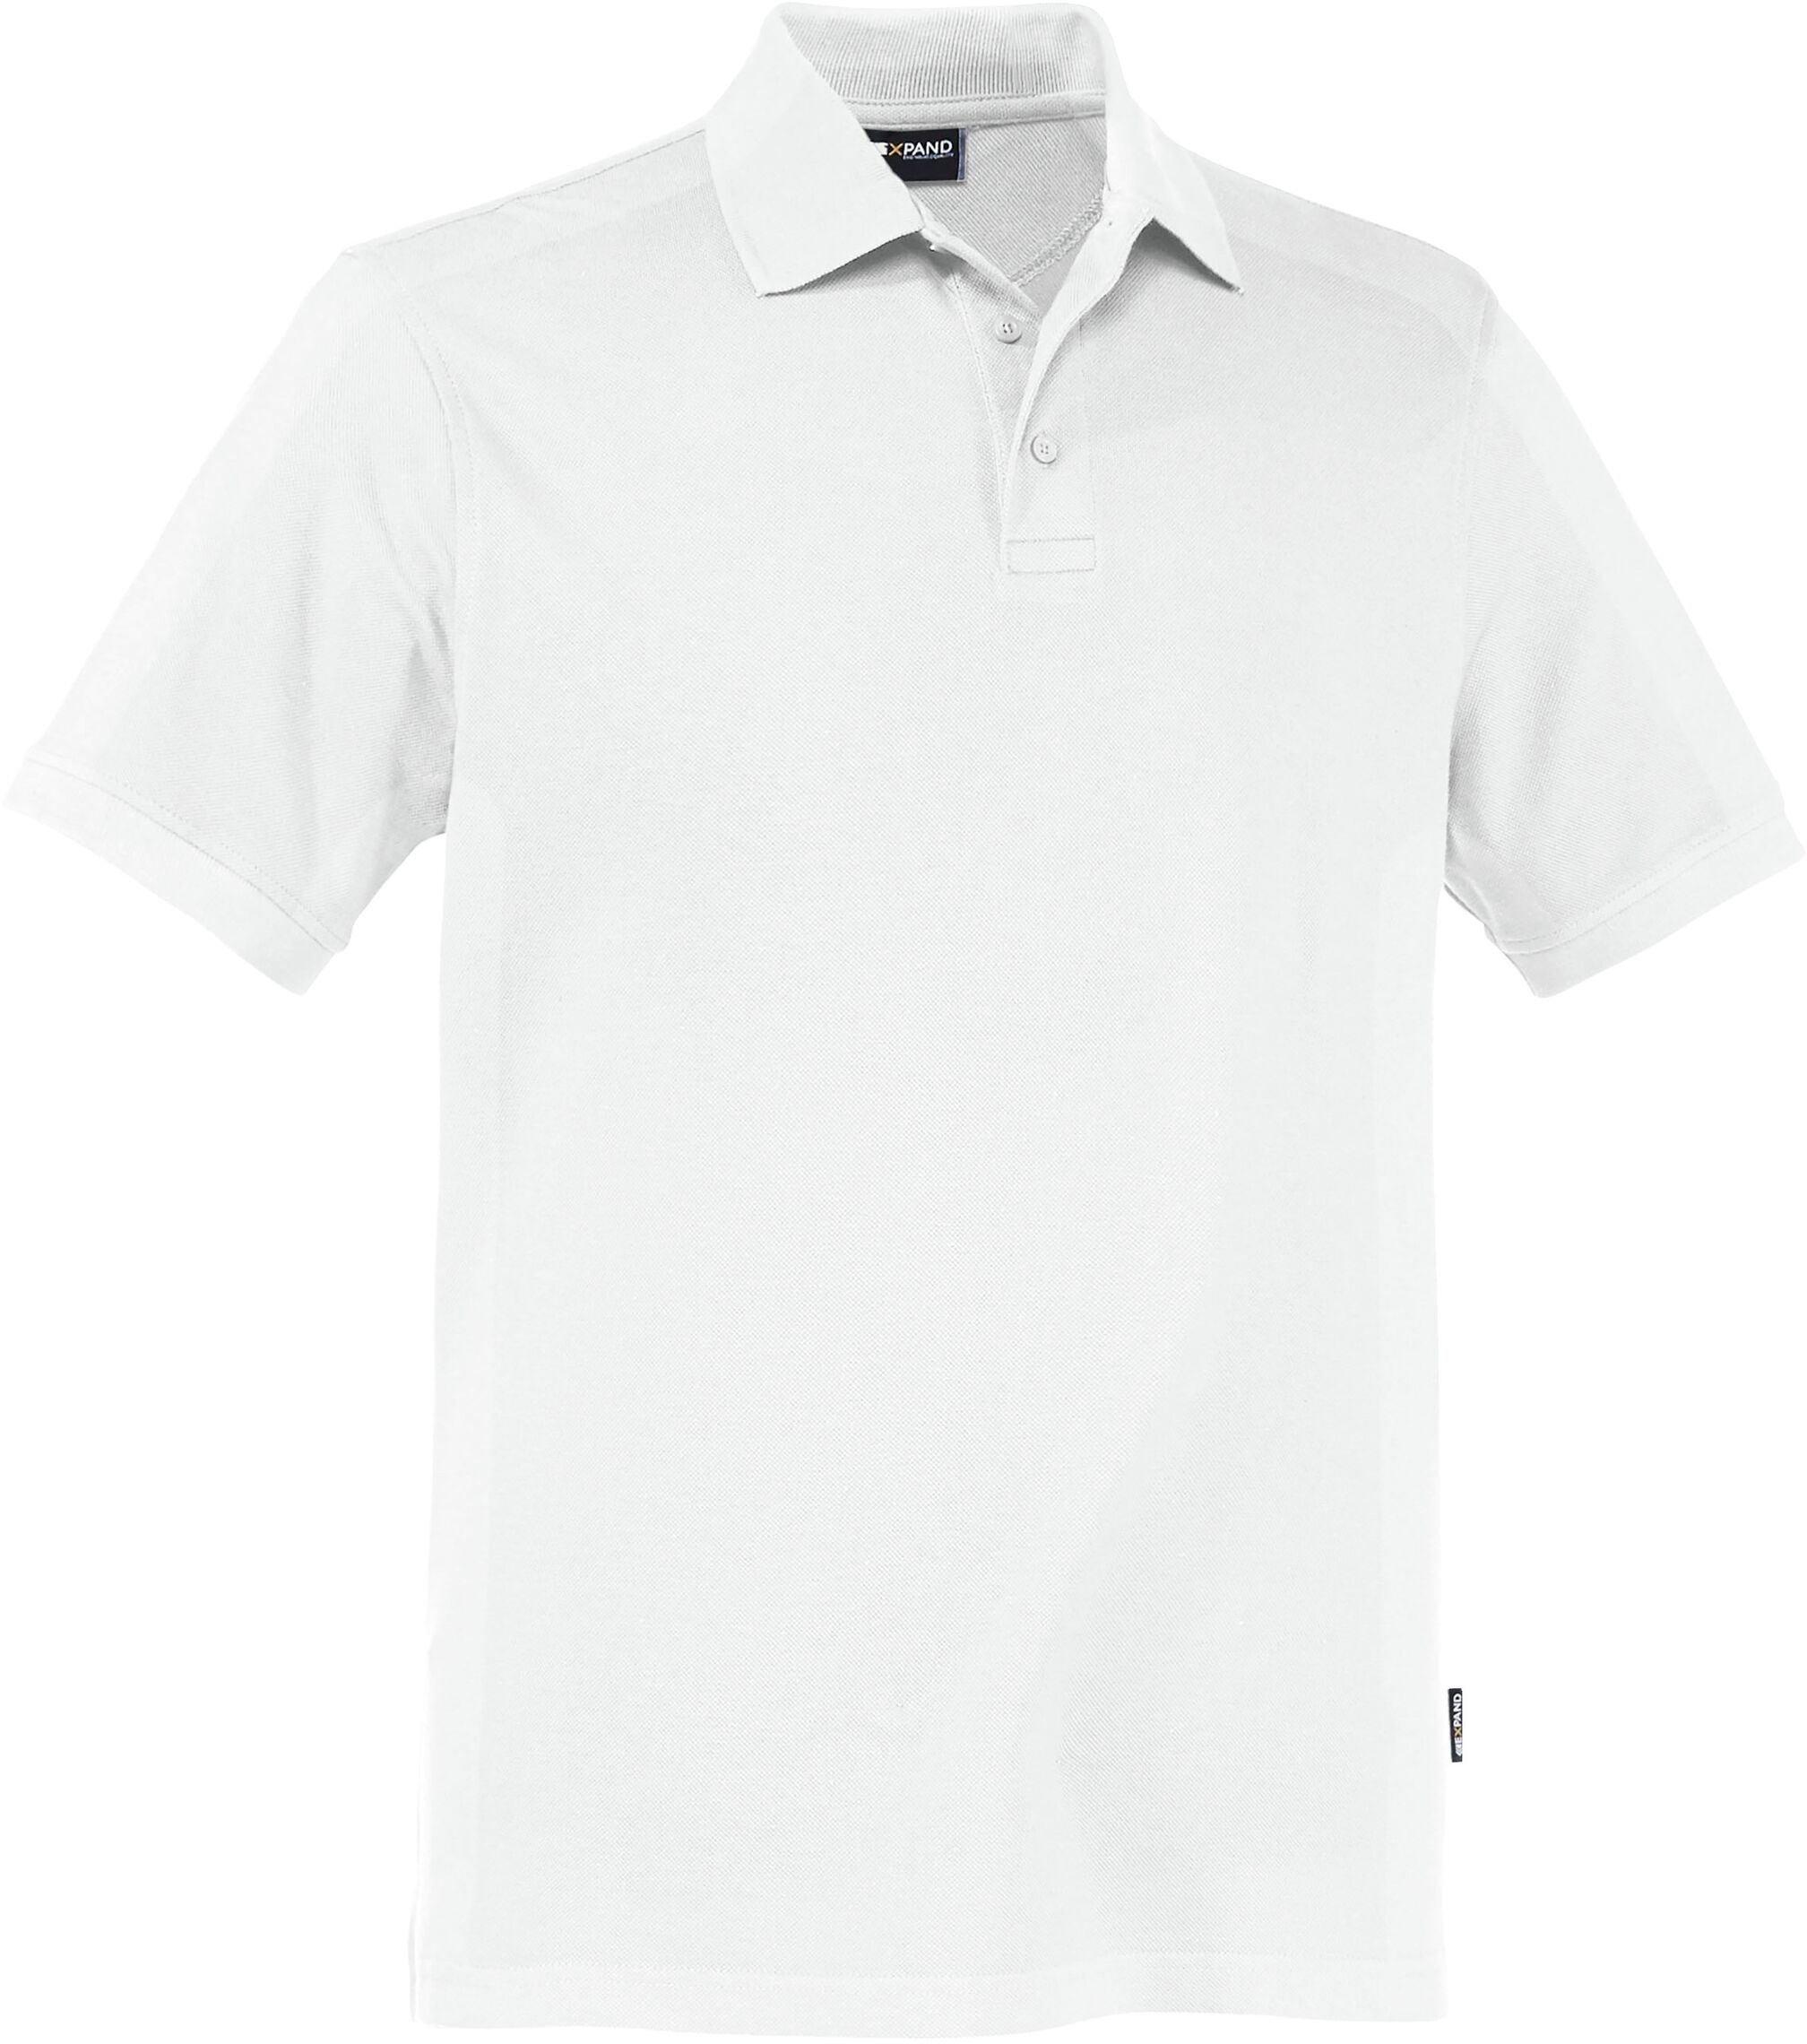 Polo-Shirt, Größe L, weiß